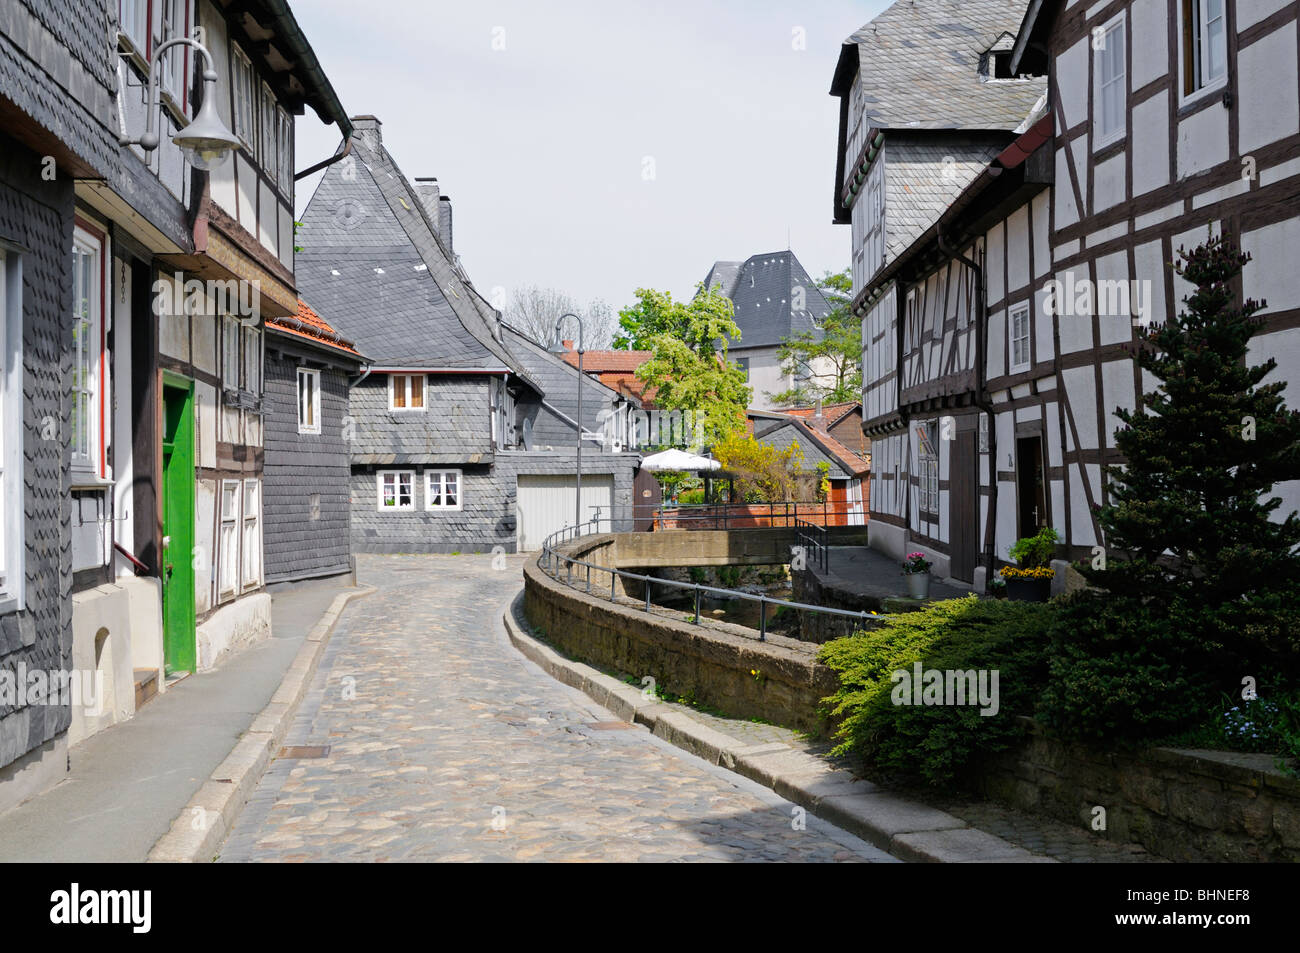 Straßenszene in Goslar, Niedersachsen, Deutschland. - Street scene in Goslar, Lower Saxony, Germany. Stock Photo